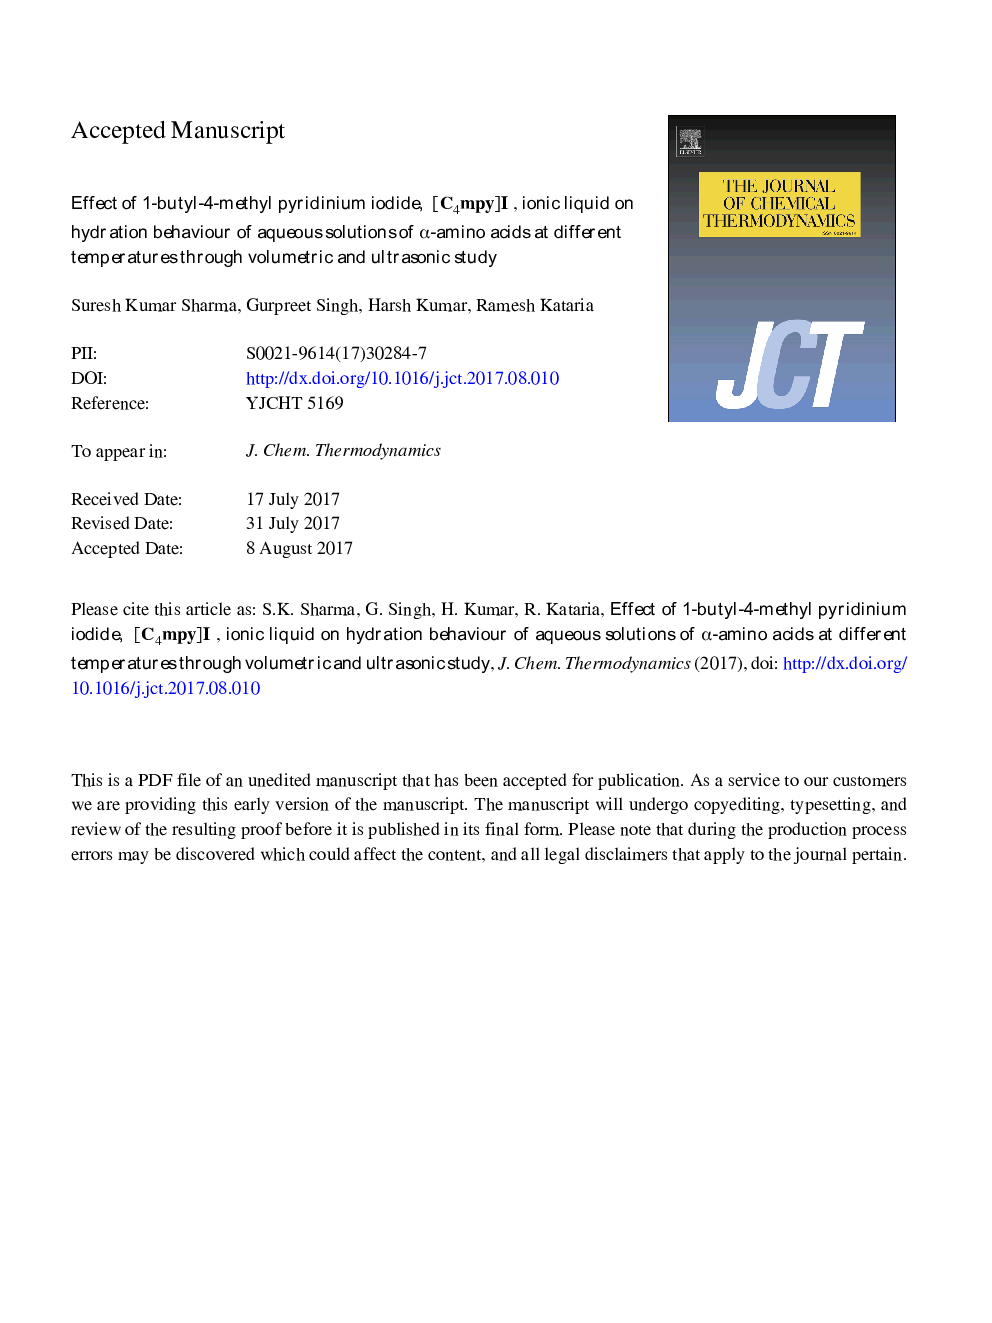 Effect of 1-butyl-4-methyl pyridinium iodide, [C4mpy]I, ionic liquid on hydration behaviour of aqueous solutions of Î±-amino acids at different temperatures through volumetric and ultrasonic study